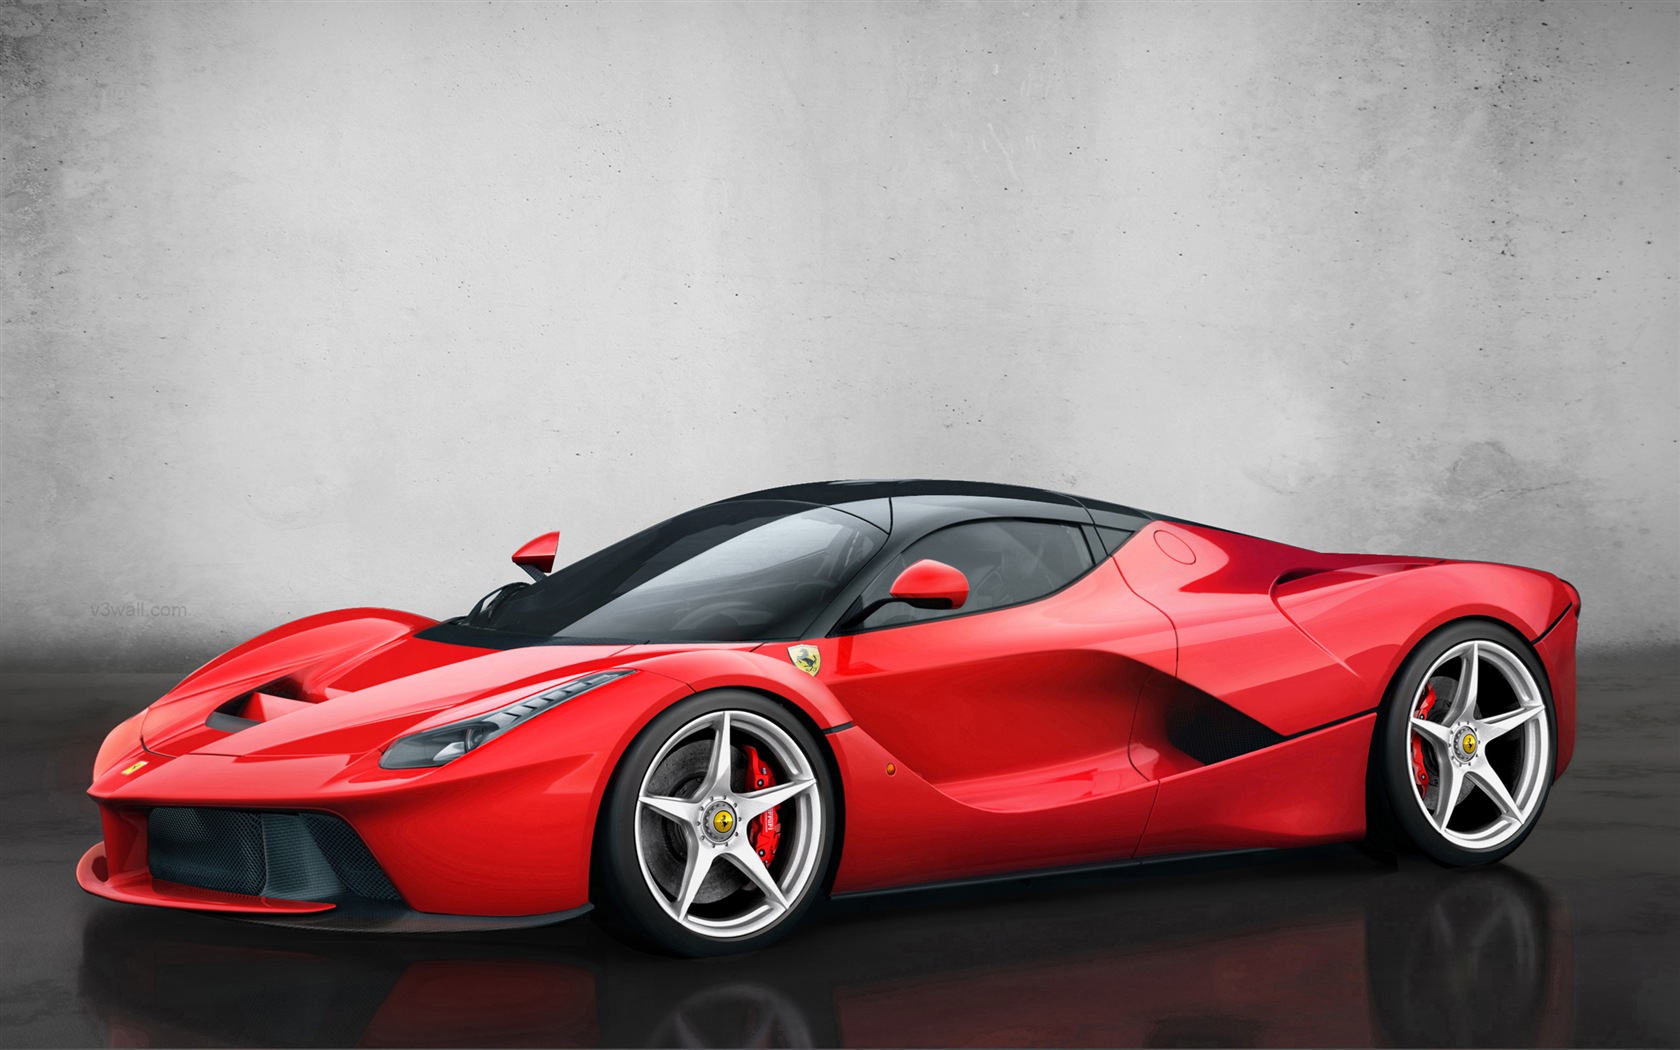 2013 Ferrari LaFerrari 法拉利LaFerrari红色超级跑车高清壁纸7 - 1680x1050